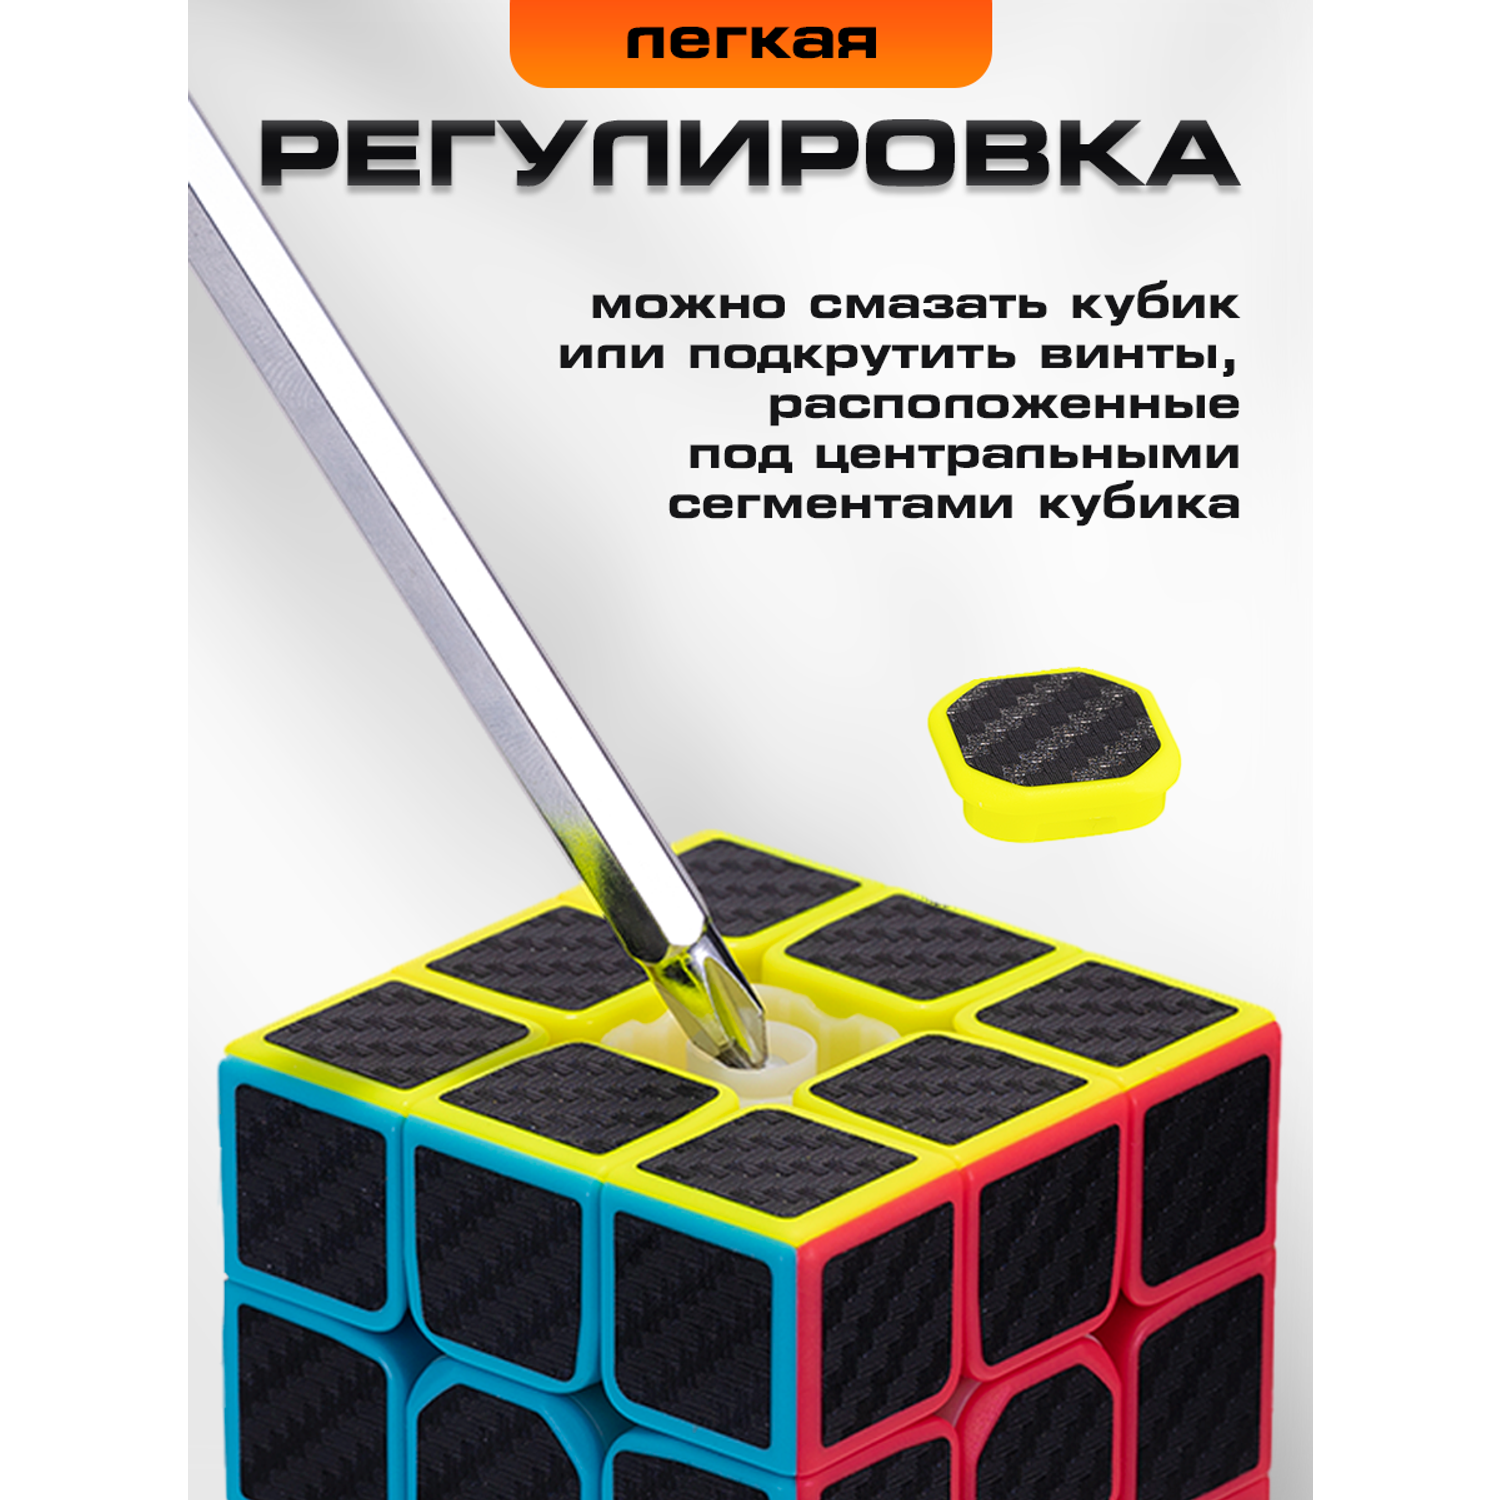 Кубик Рубика 3х3 головоломка SHANTOU карбоновый - фото 4